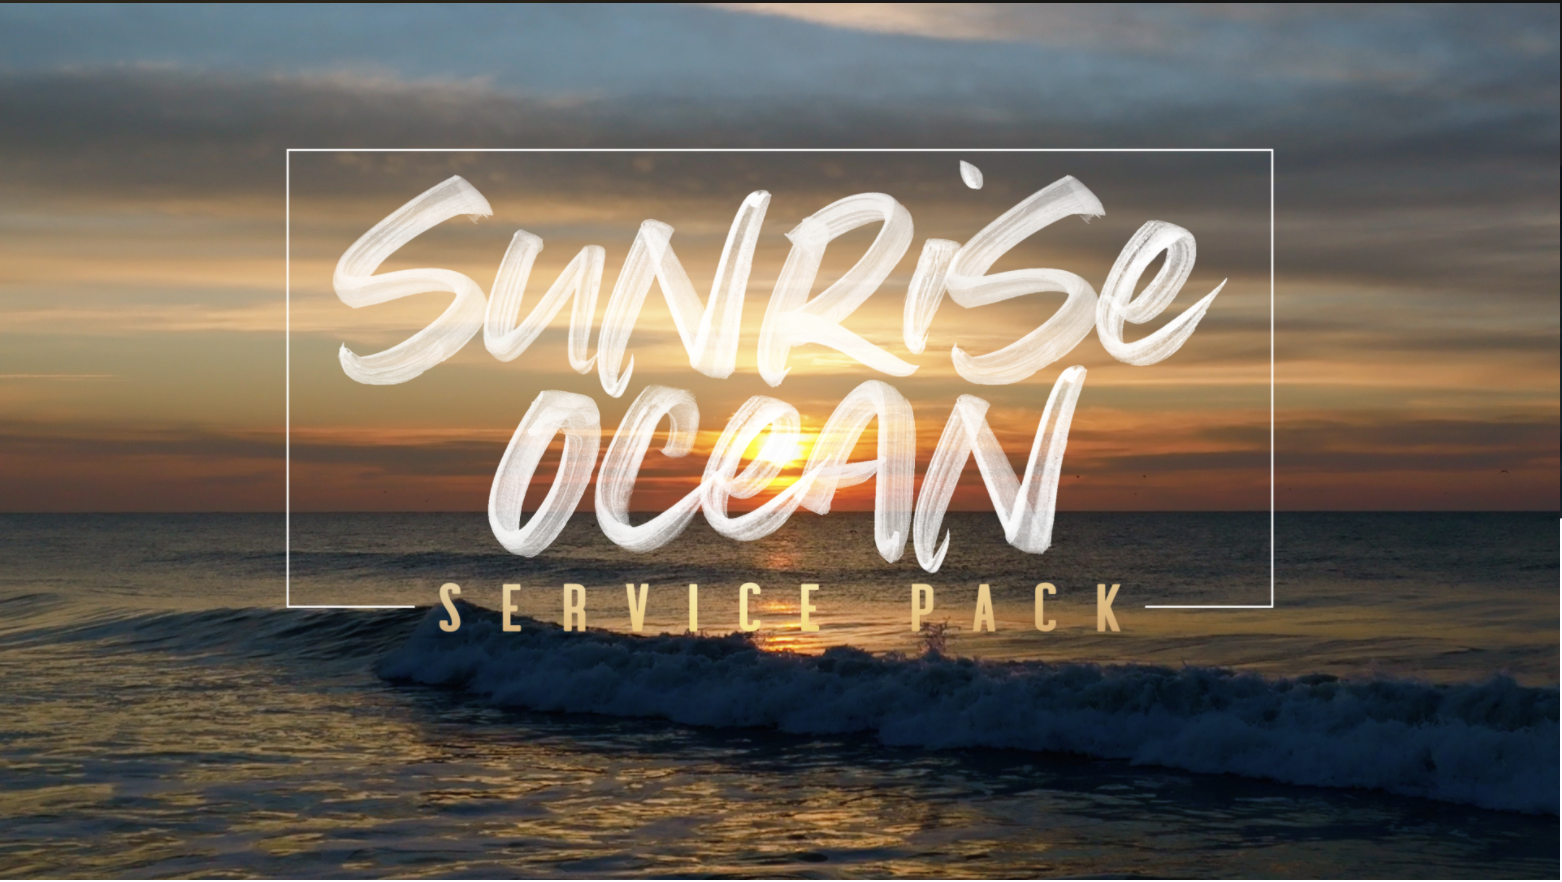 Sunrise Ocean Service Pack